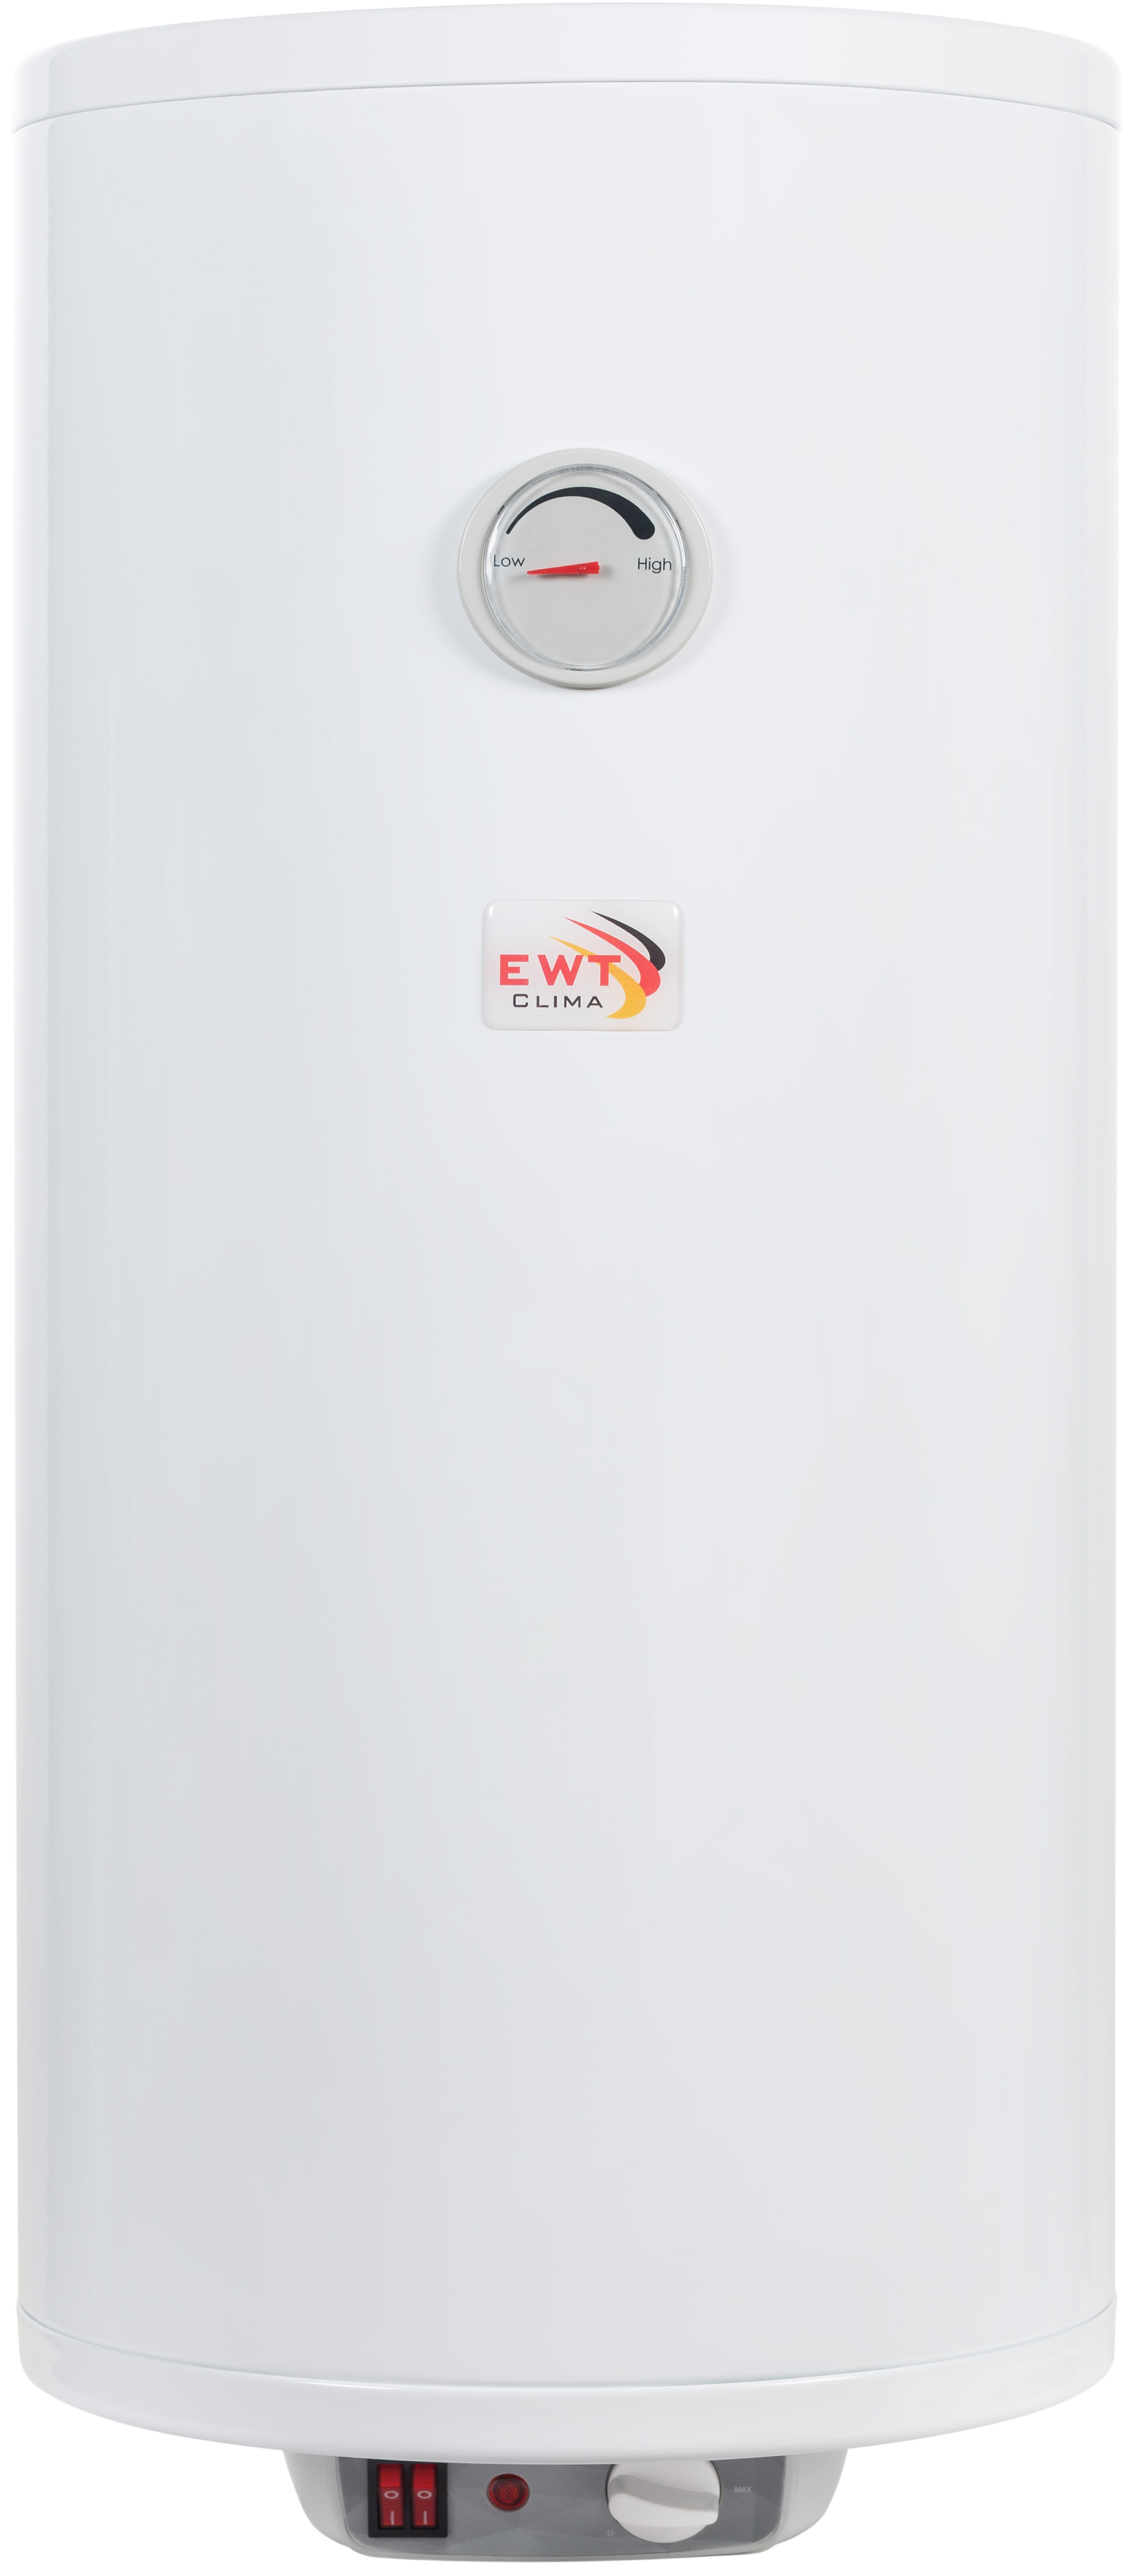 Бойлер EWT Clima Runde Dry Slim AWH/M 50 V в интернет-магазине, главное фото